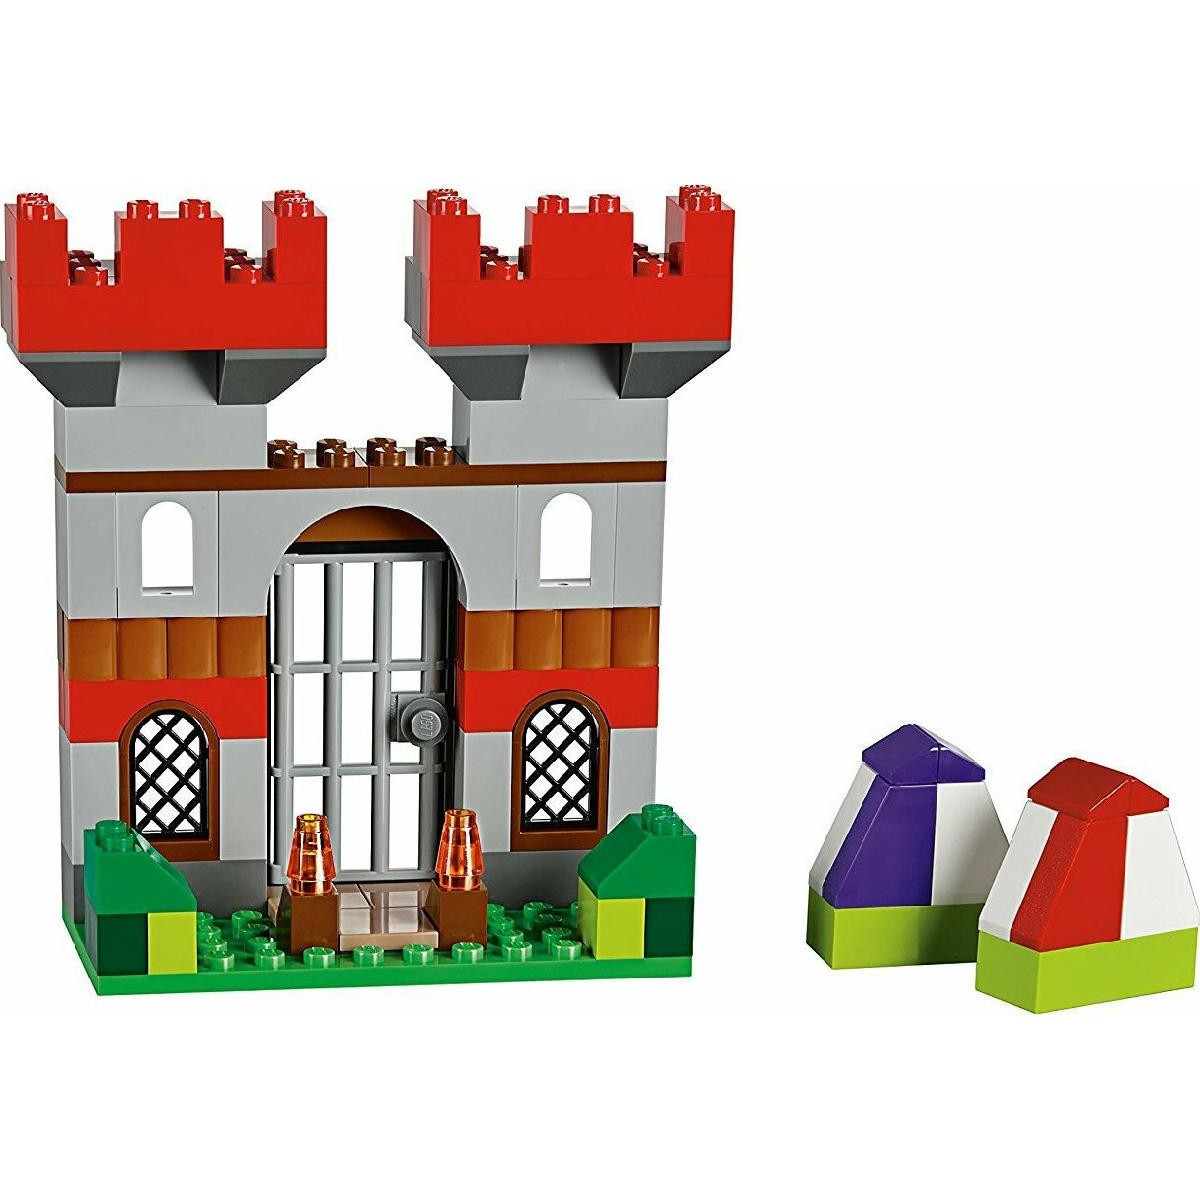 LEGO® Classic Large Creative Brick Box (10698)